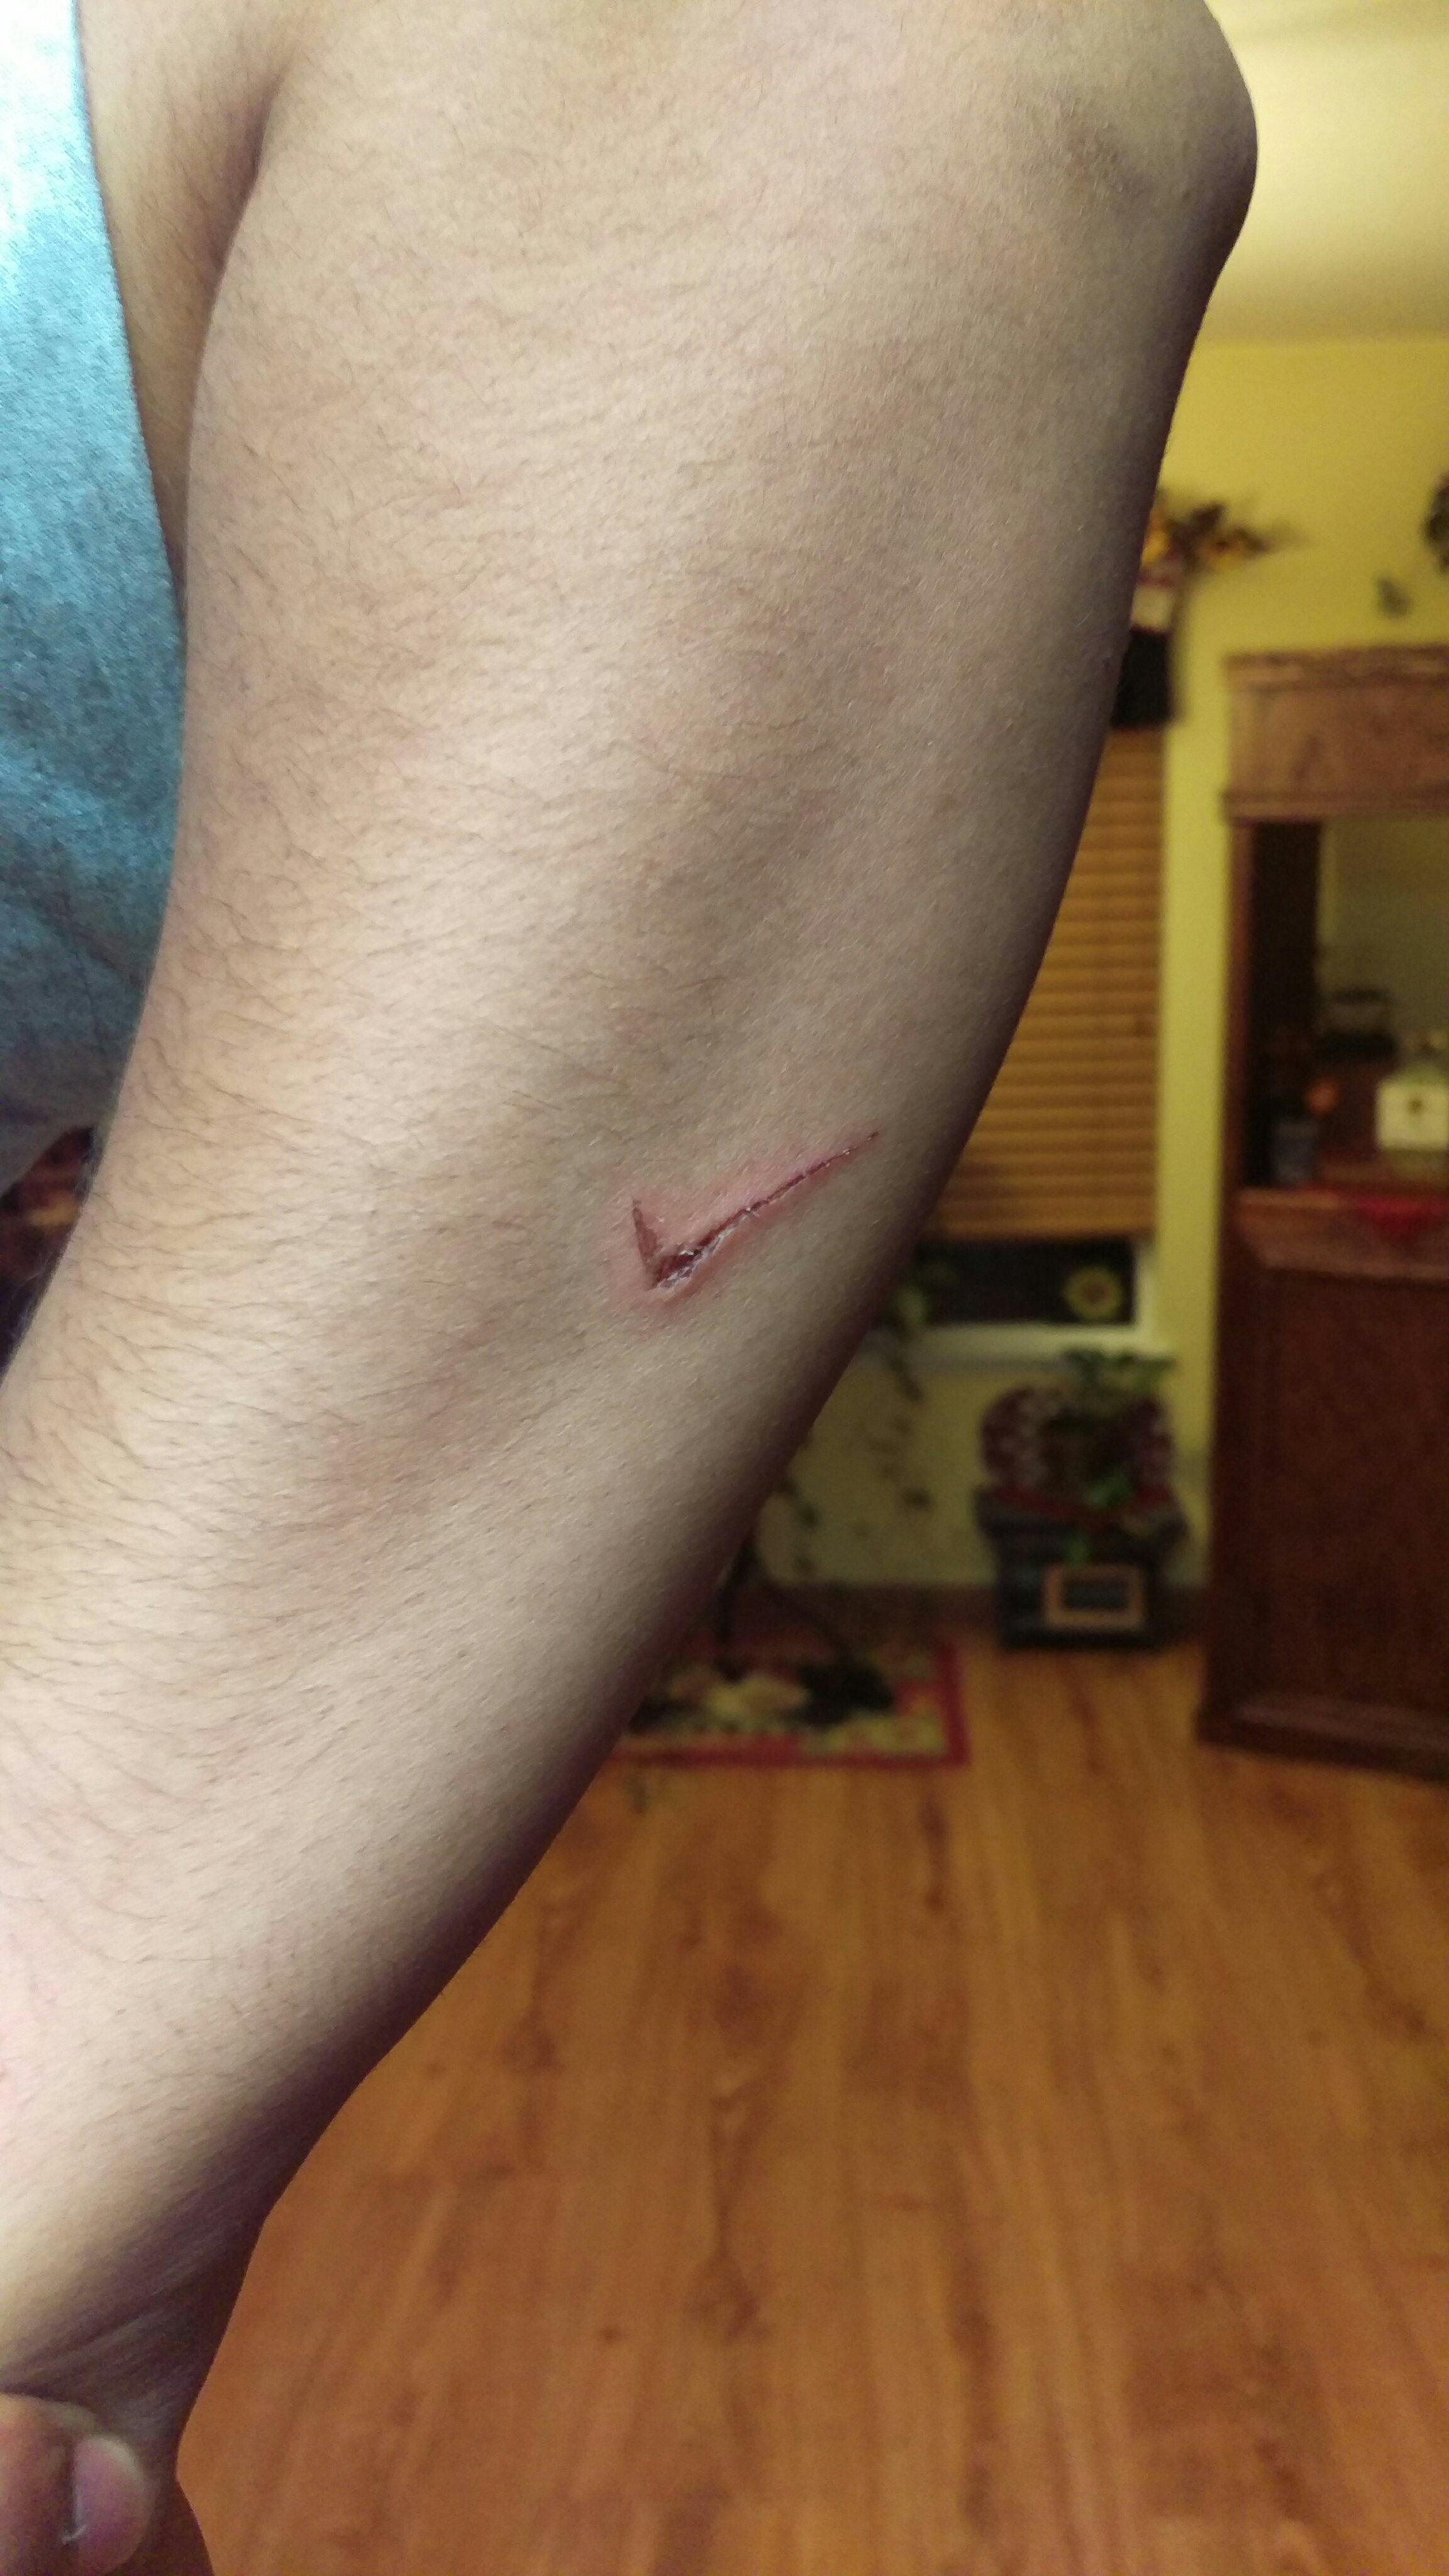 Brown Nike Logo - My cut on my arm looks like the Nike logo